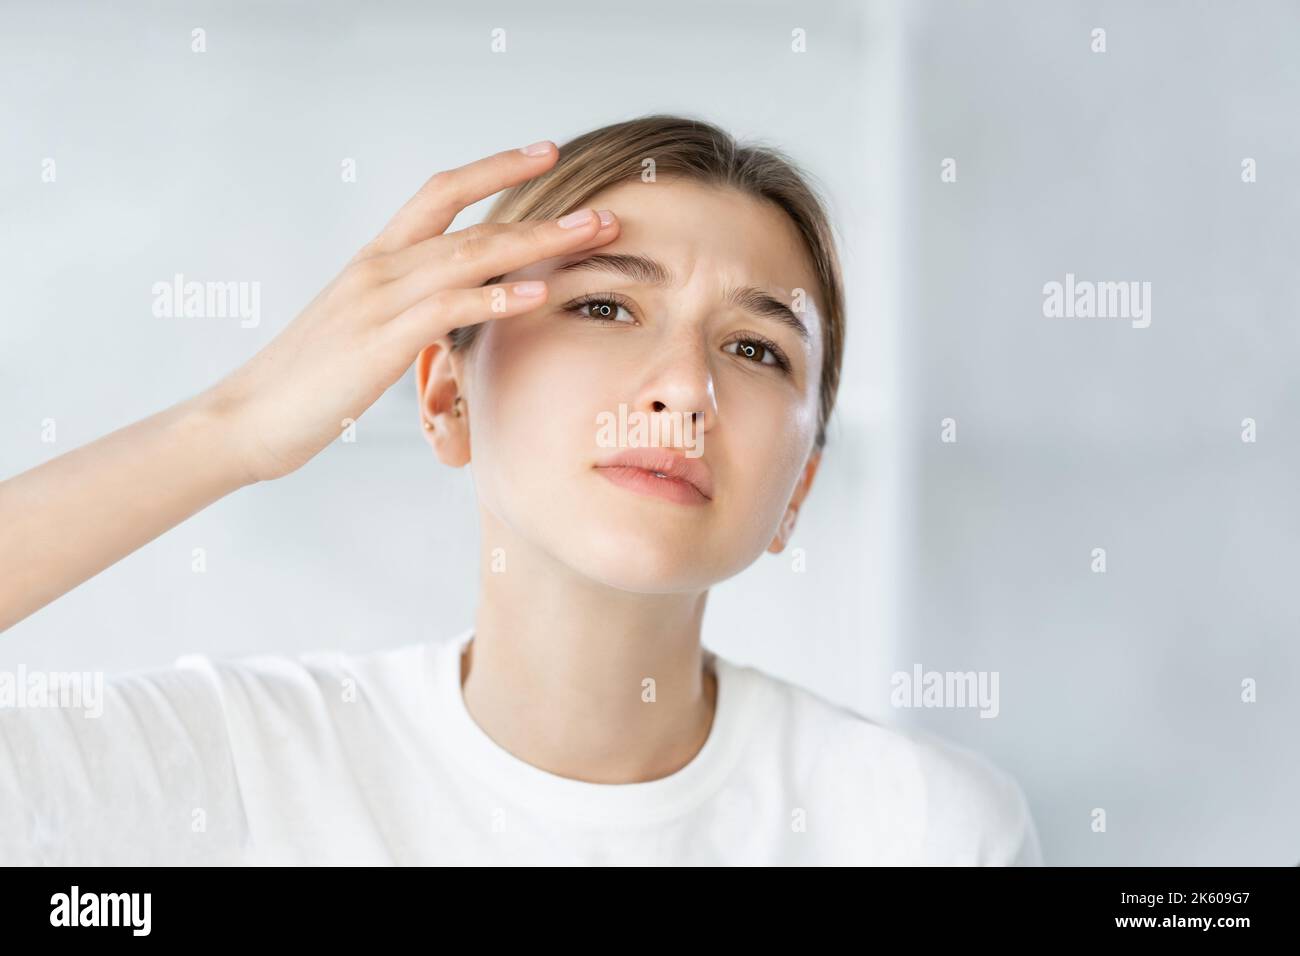 sensitive skin acne problem woman touching face Stock Photo